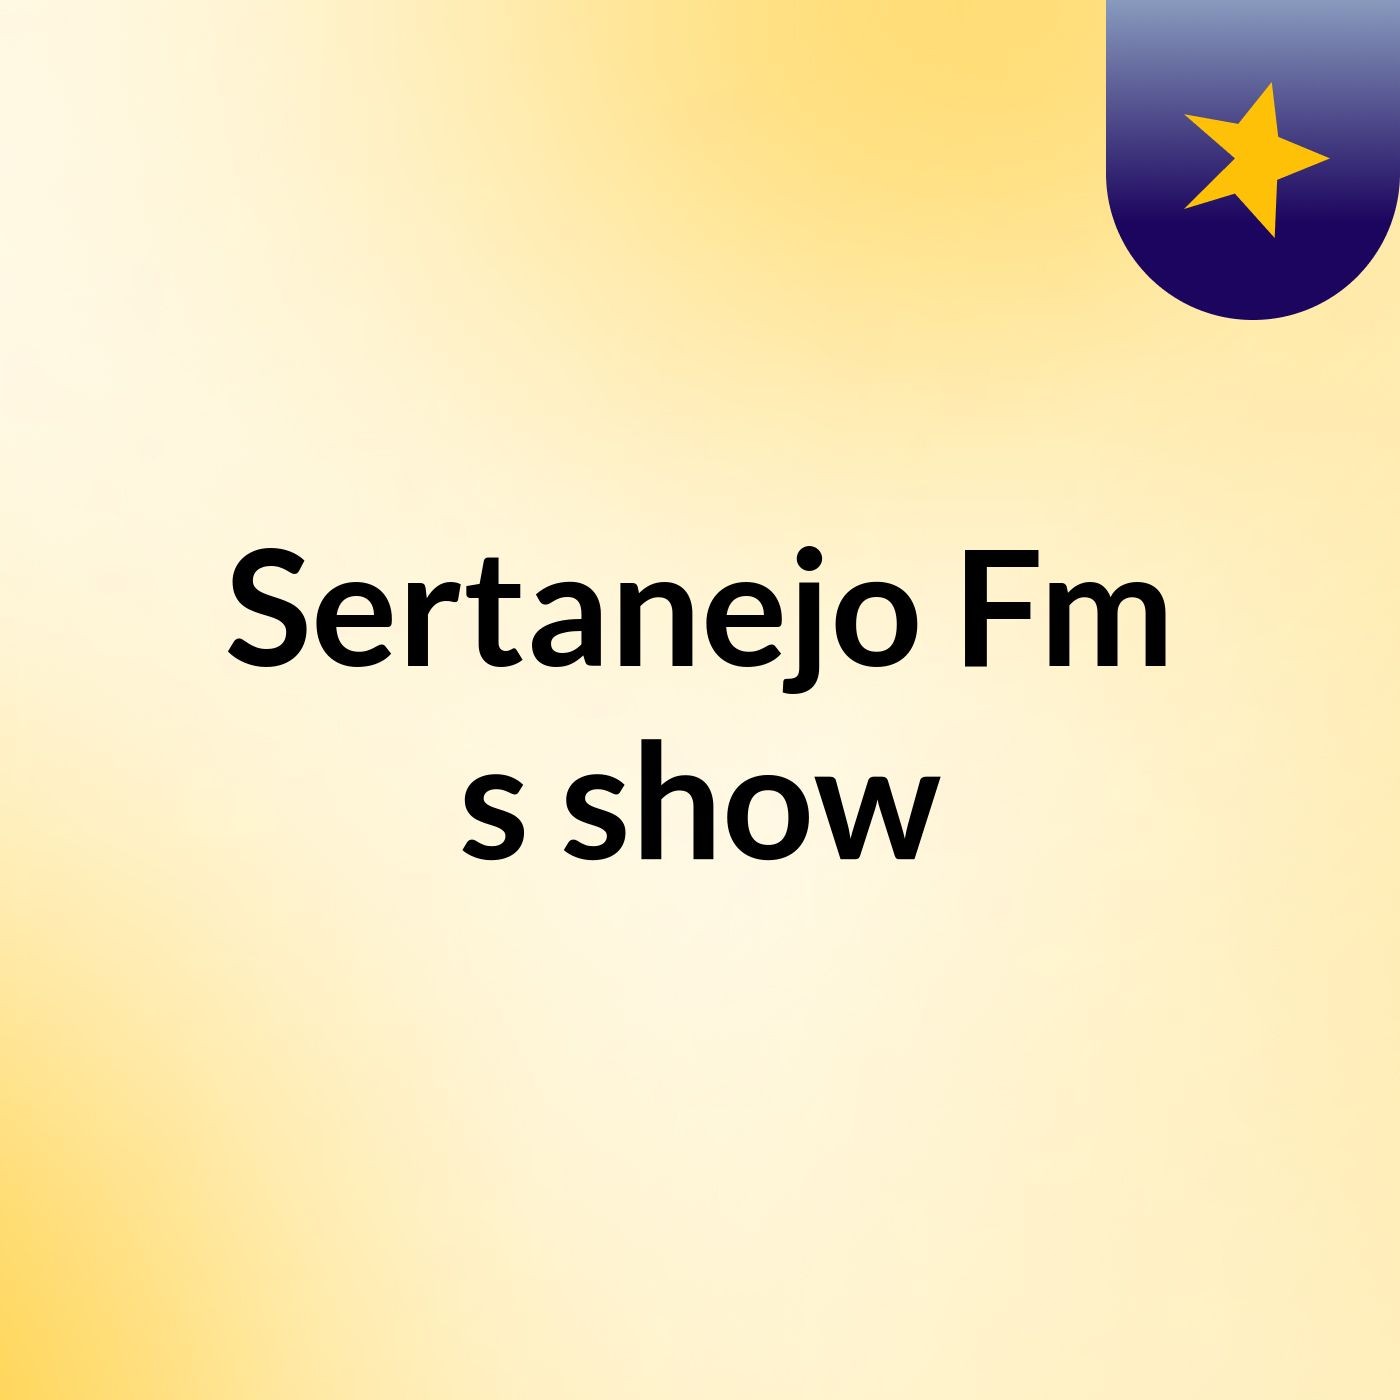 Sertanejo Fm's show